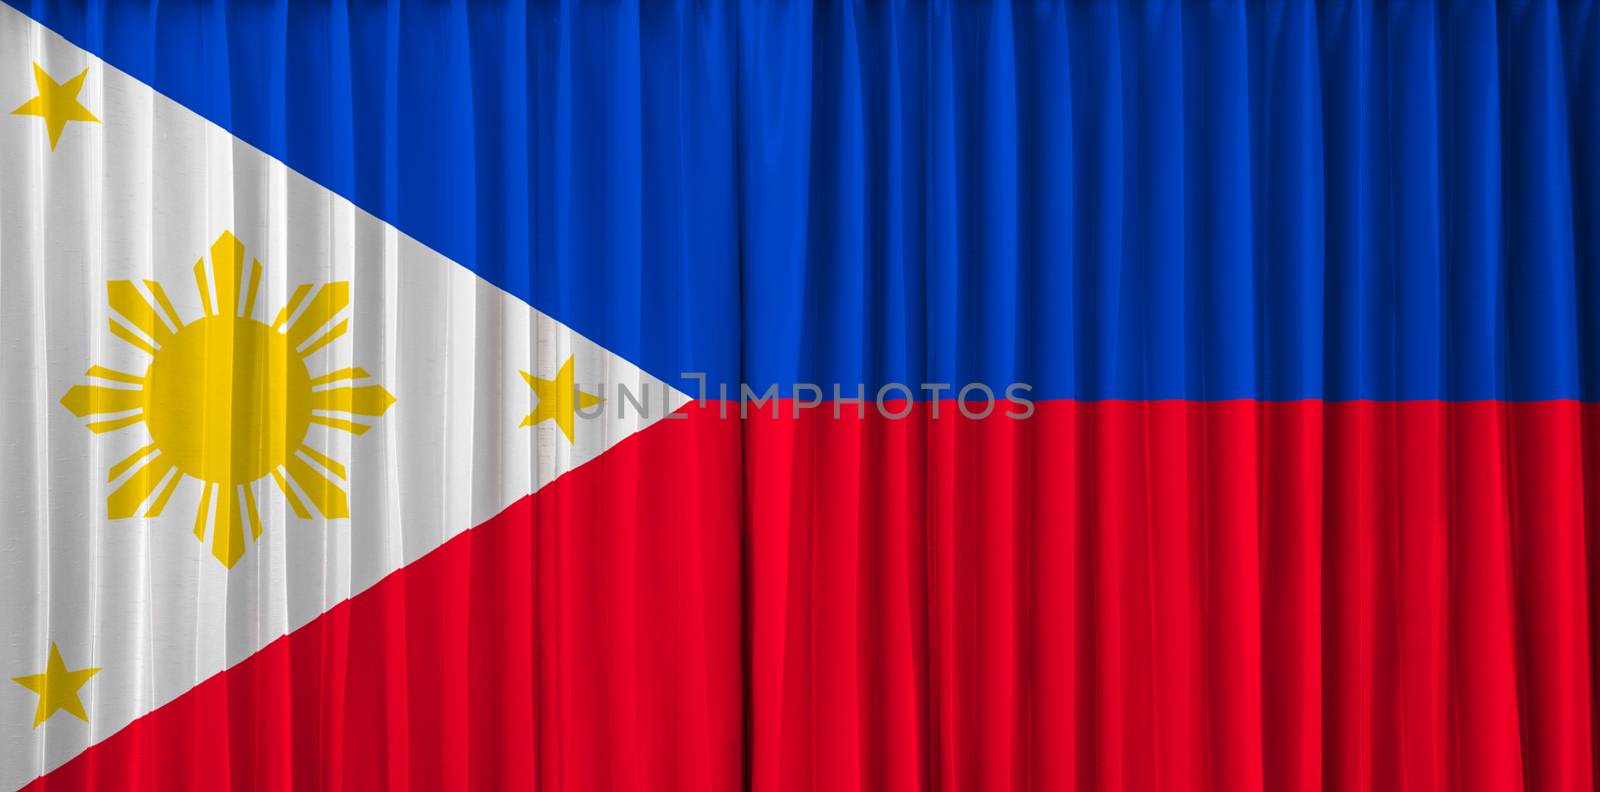 Phillippines flag on curtain